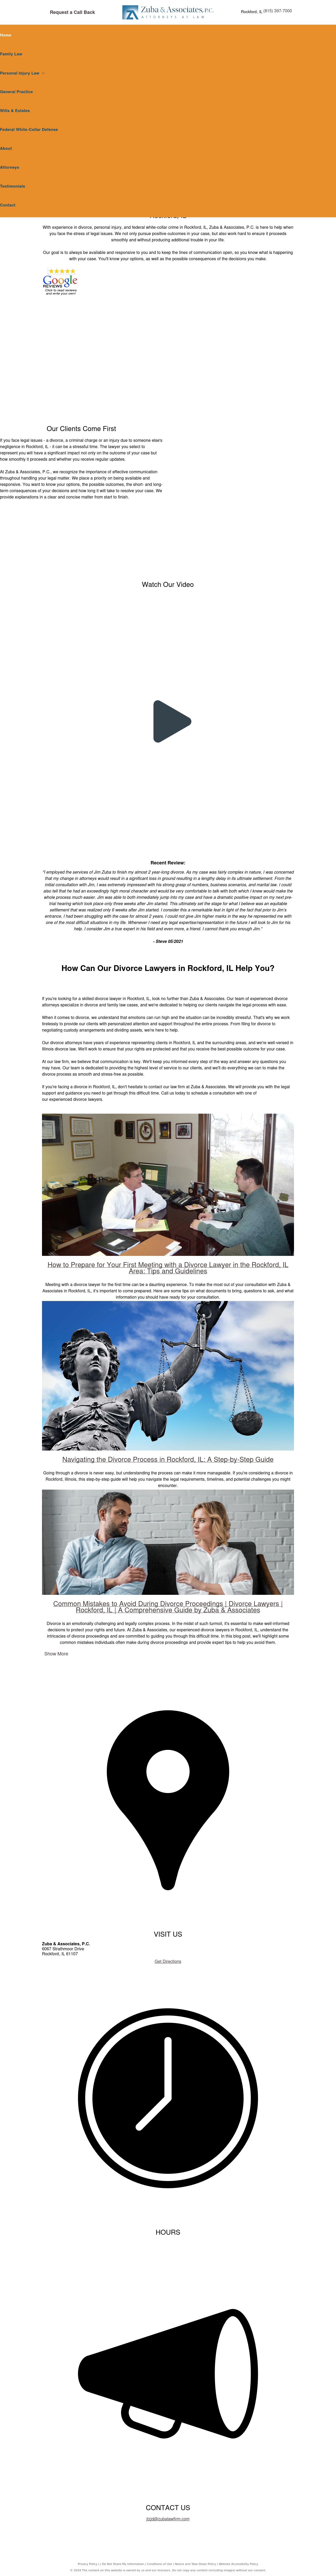 Zuba & Associates, P.C. - Rockford IL Lawyers